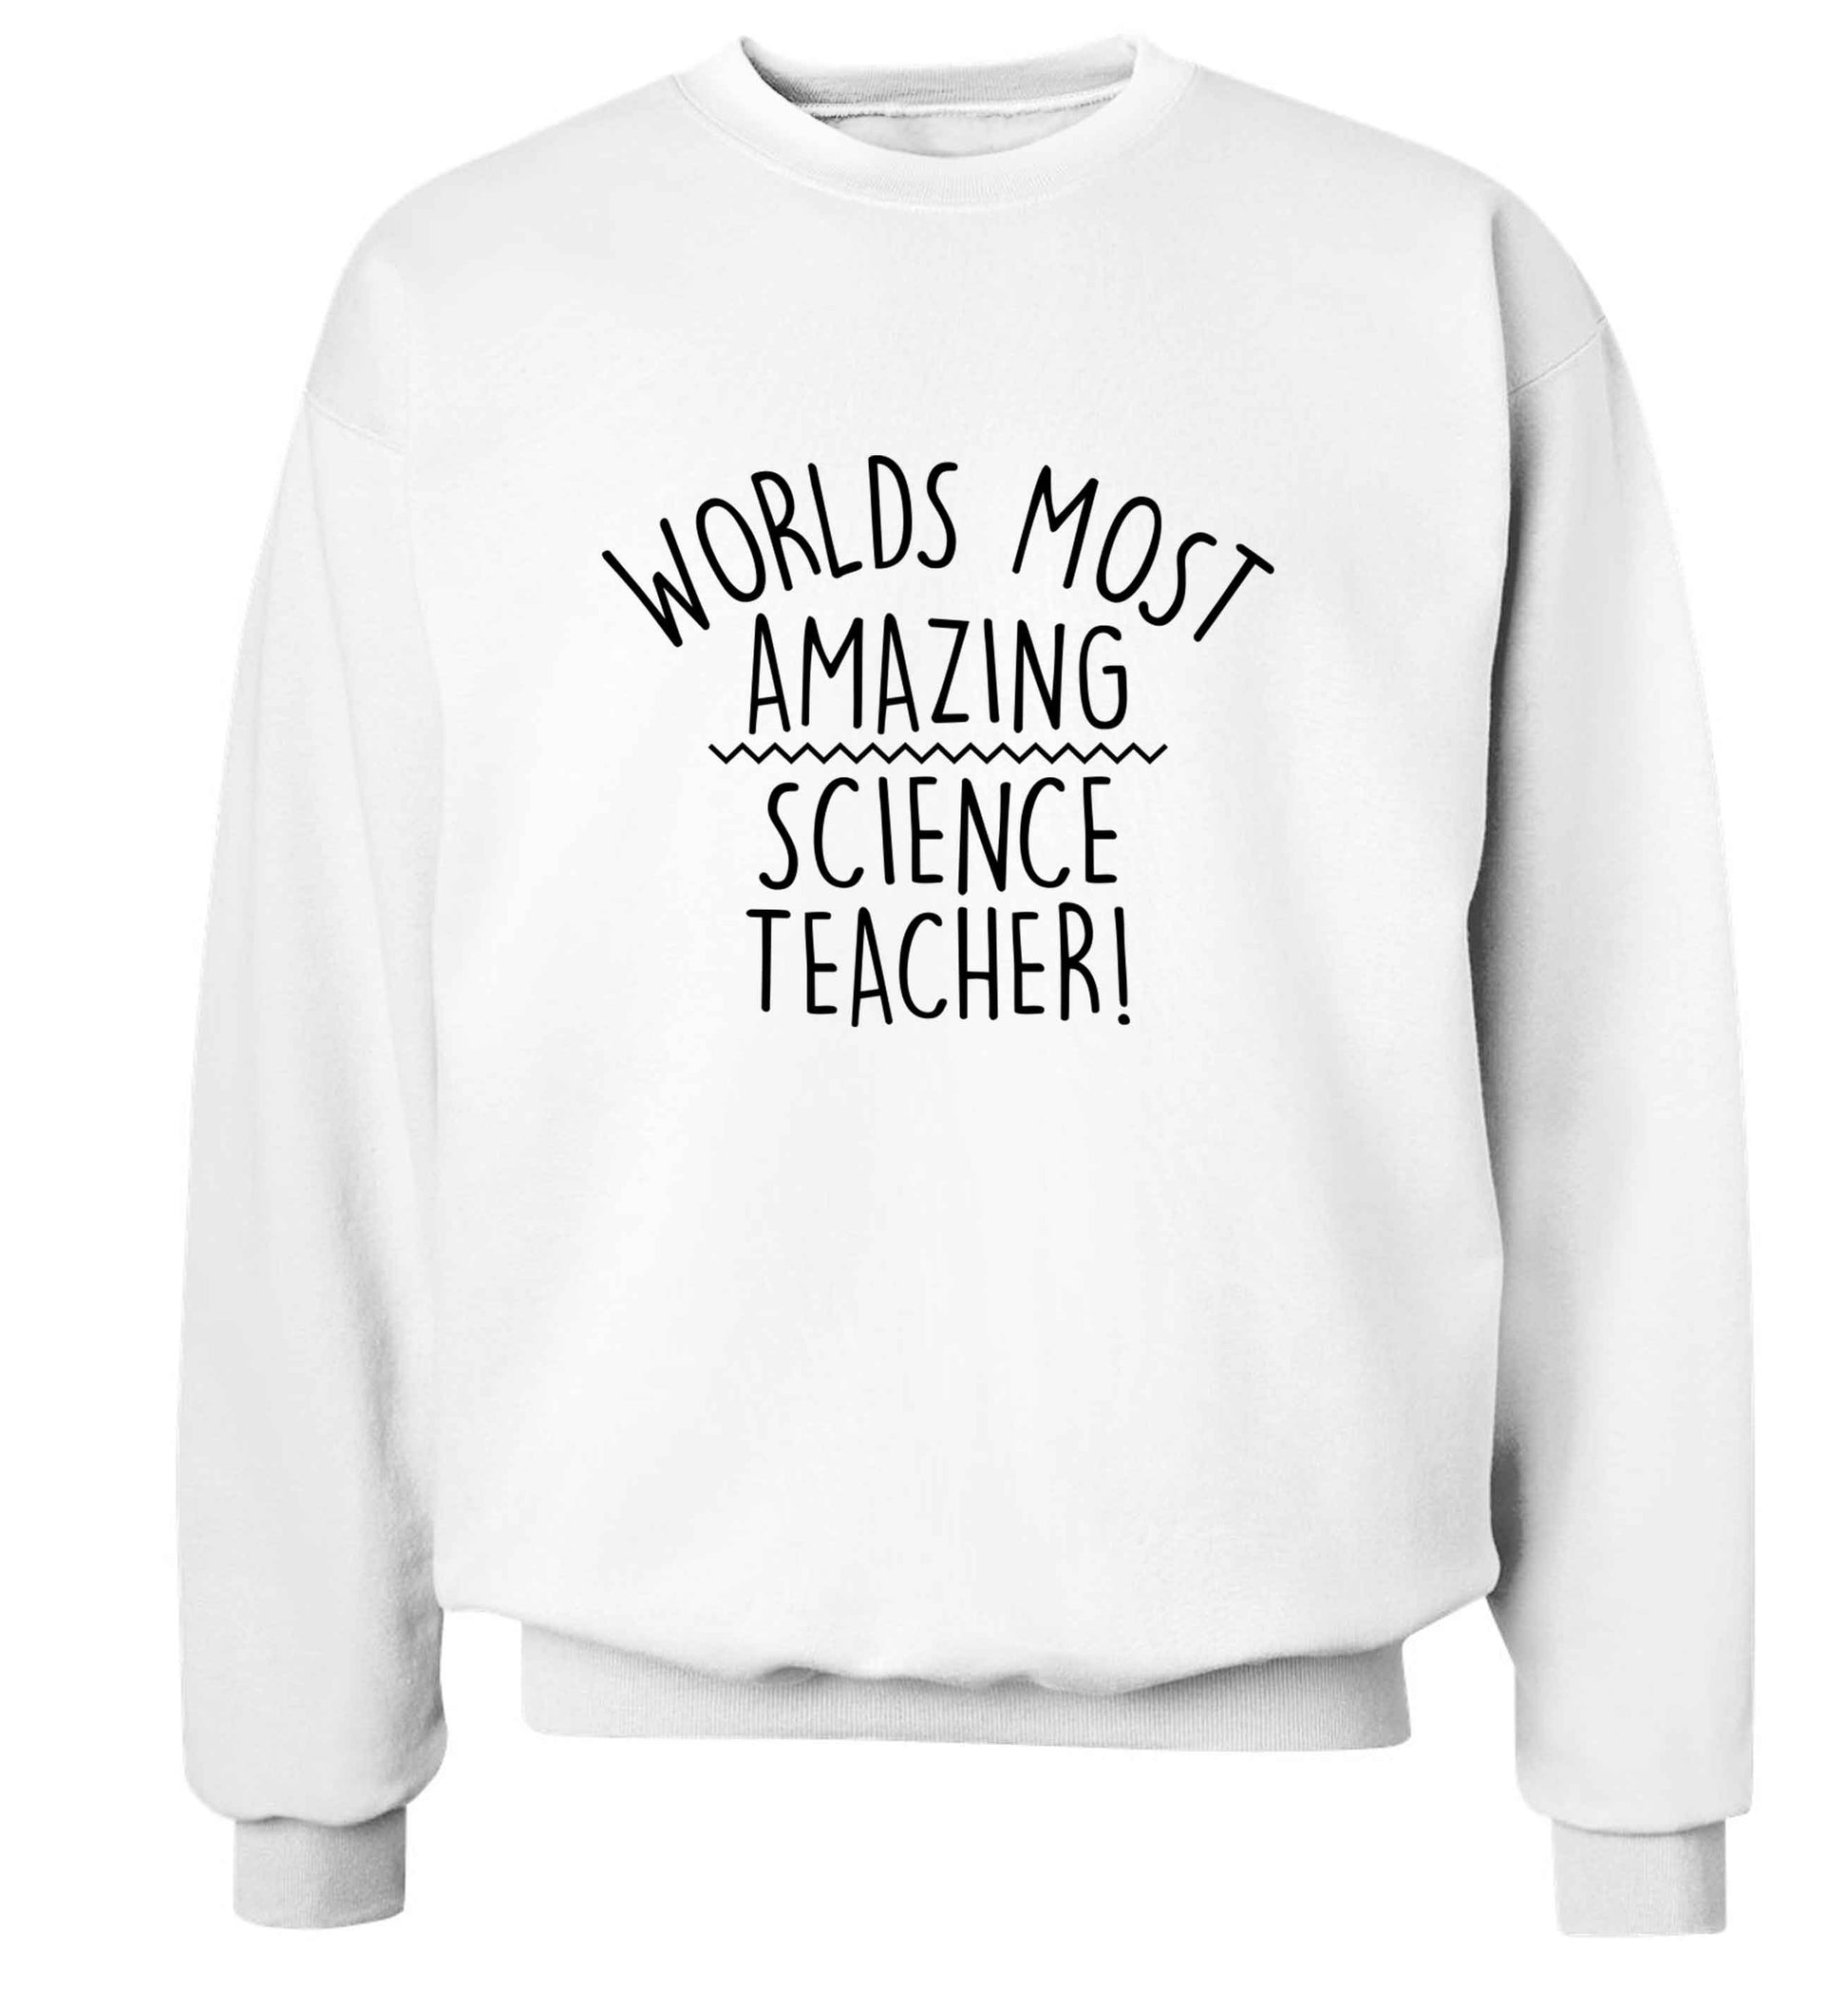 Worlds most amazing science teacher adult's unisex white sweater 2XL